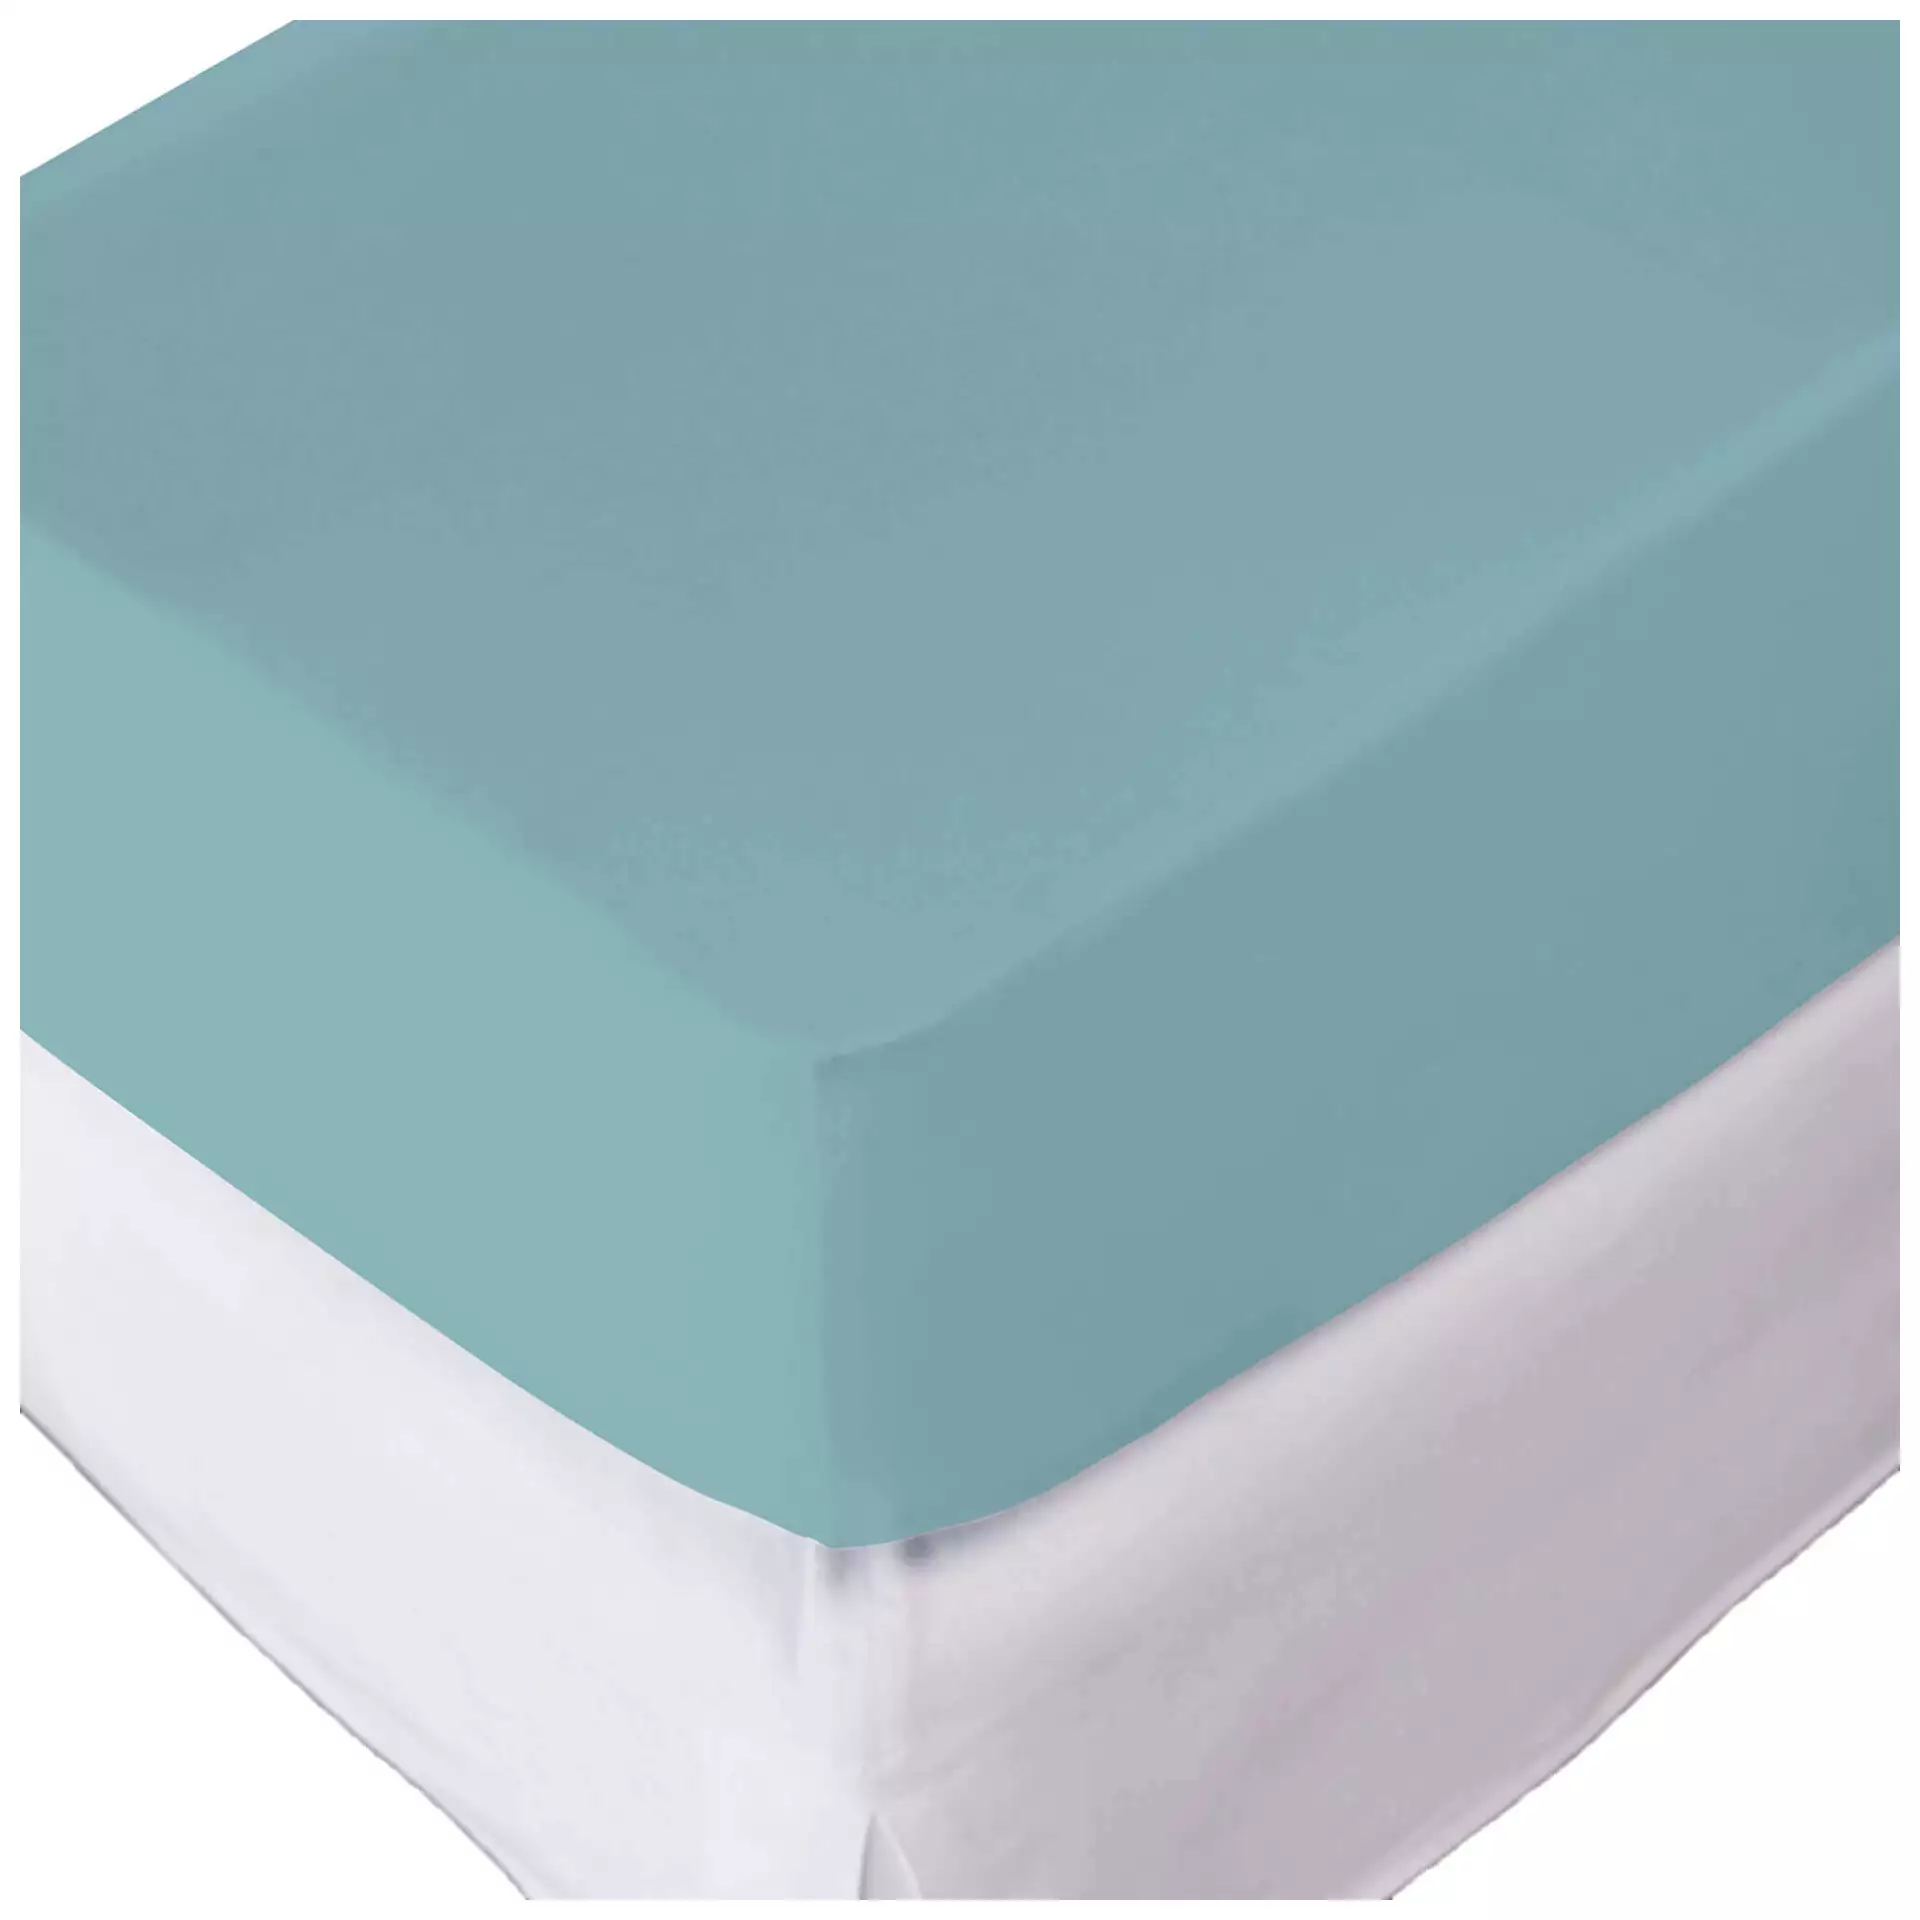 Fixleintuch für Topper Jersey Aqua Kremer Leon AG / Farbe: Aqua / Material: